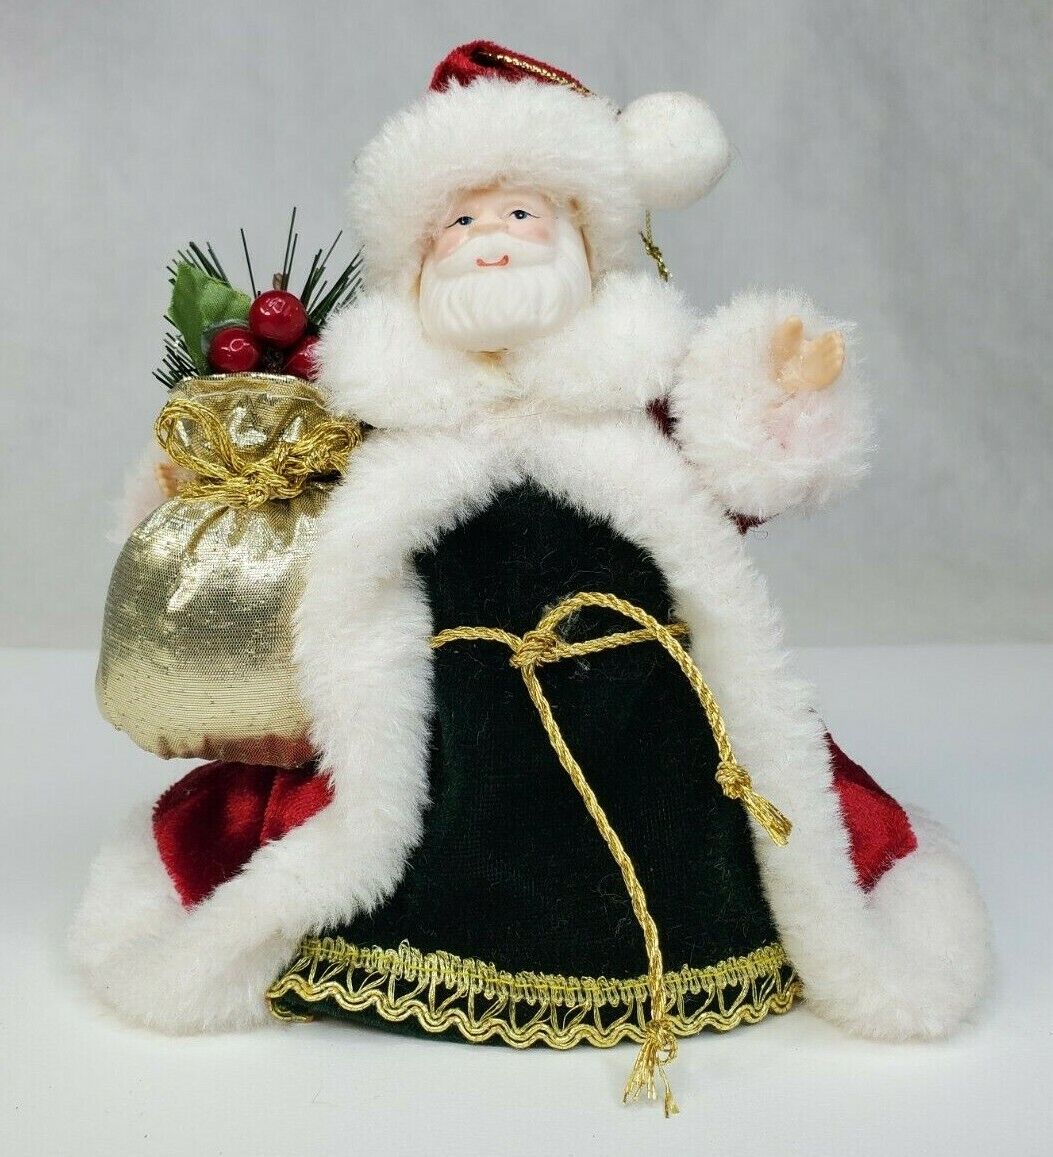 Christmas Ornament Santa Claus